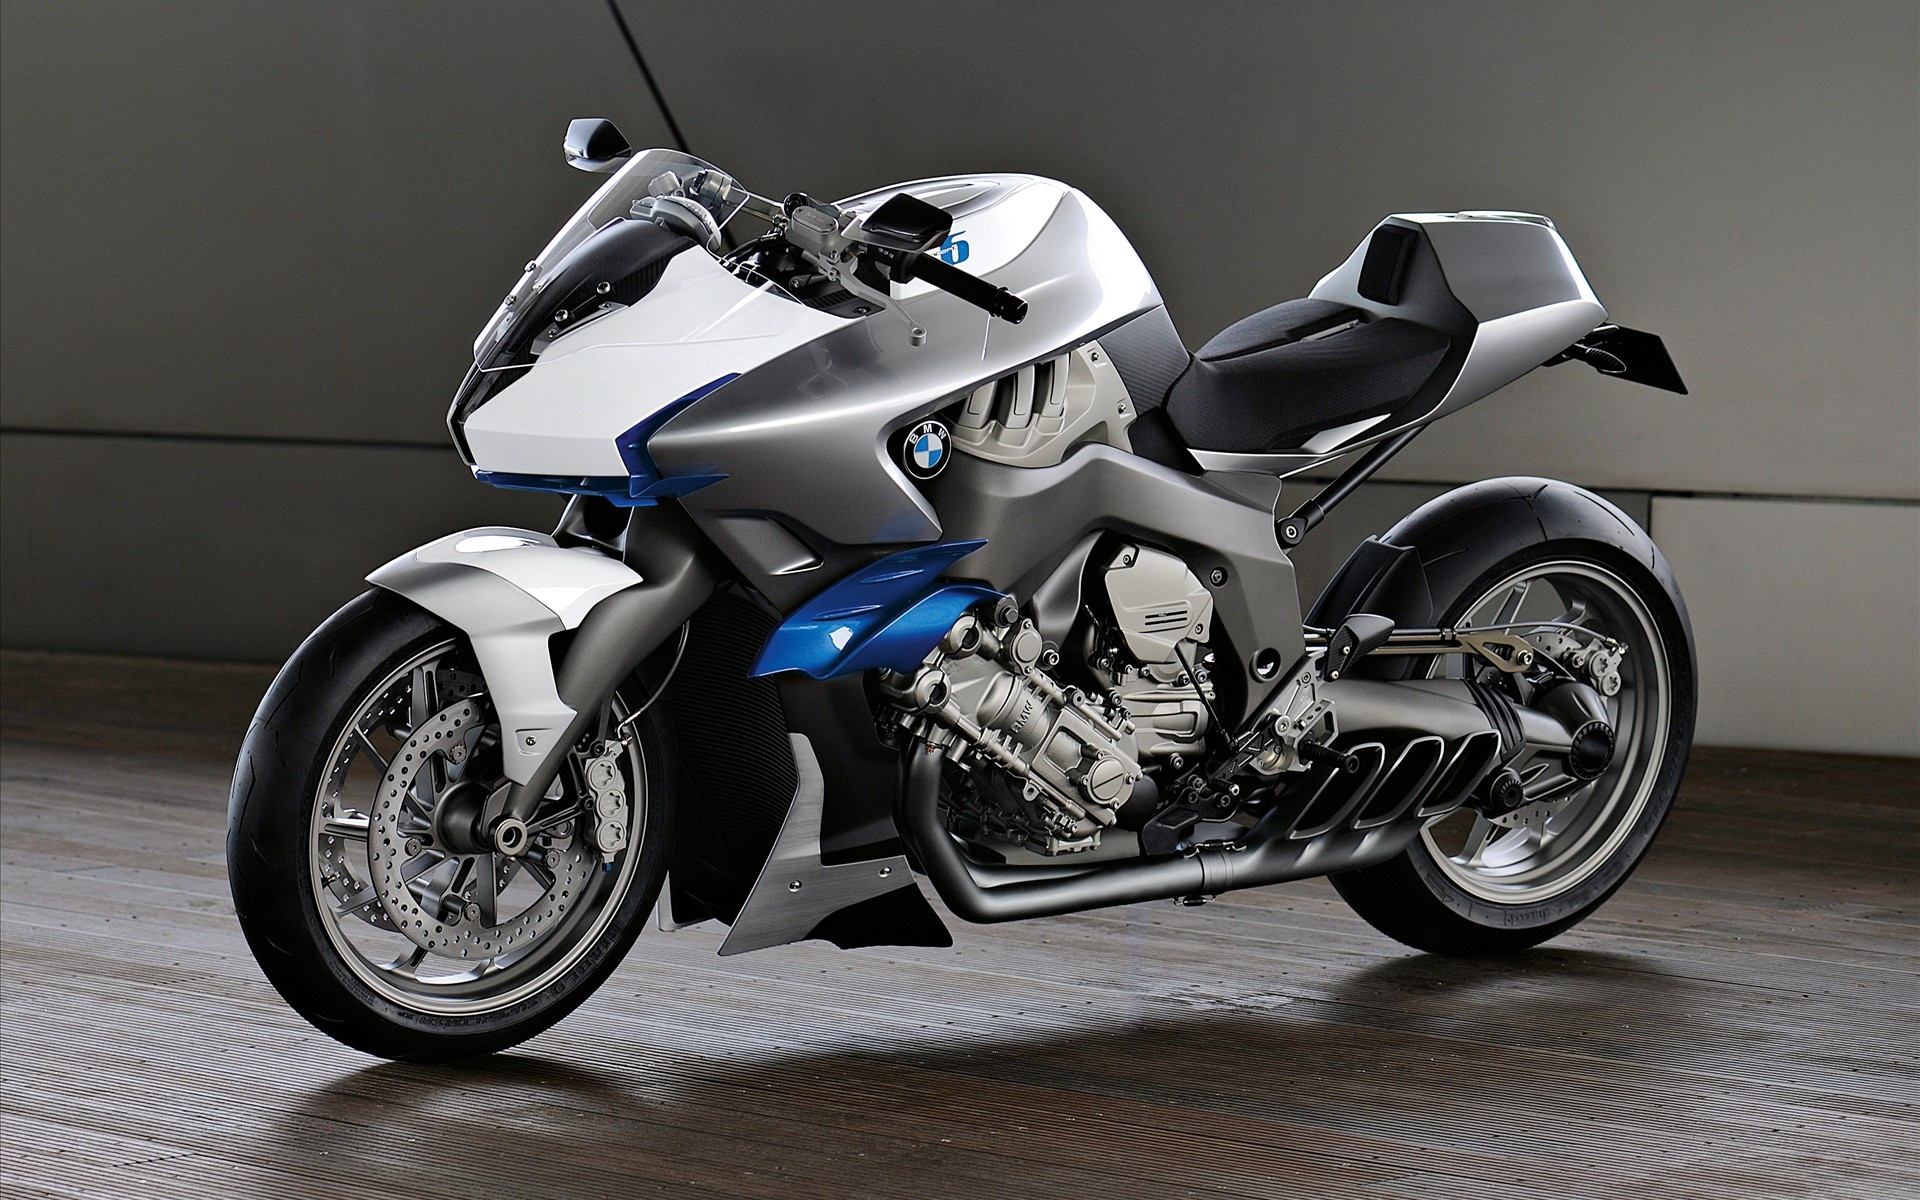 http://4.bp.blogspot.com/-QJBczrUN5Uo/UNB_m65OXQI/AAAAAAAALC8/veSlVJphWOs/s1920/bmw-motorrad-concept-2-bike-1200.jpg